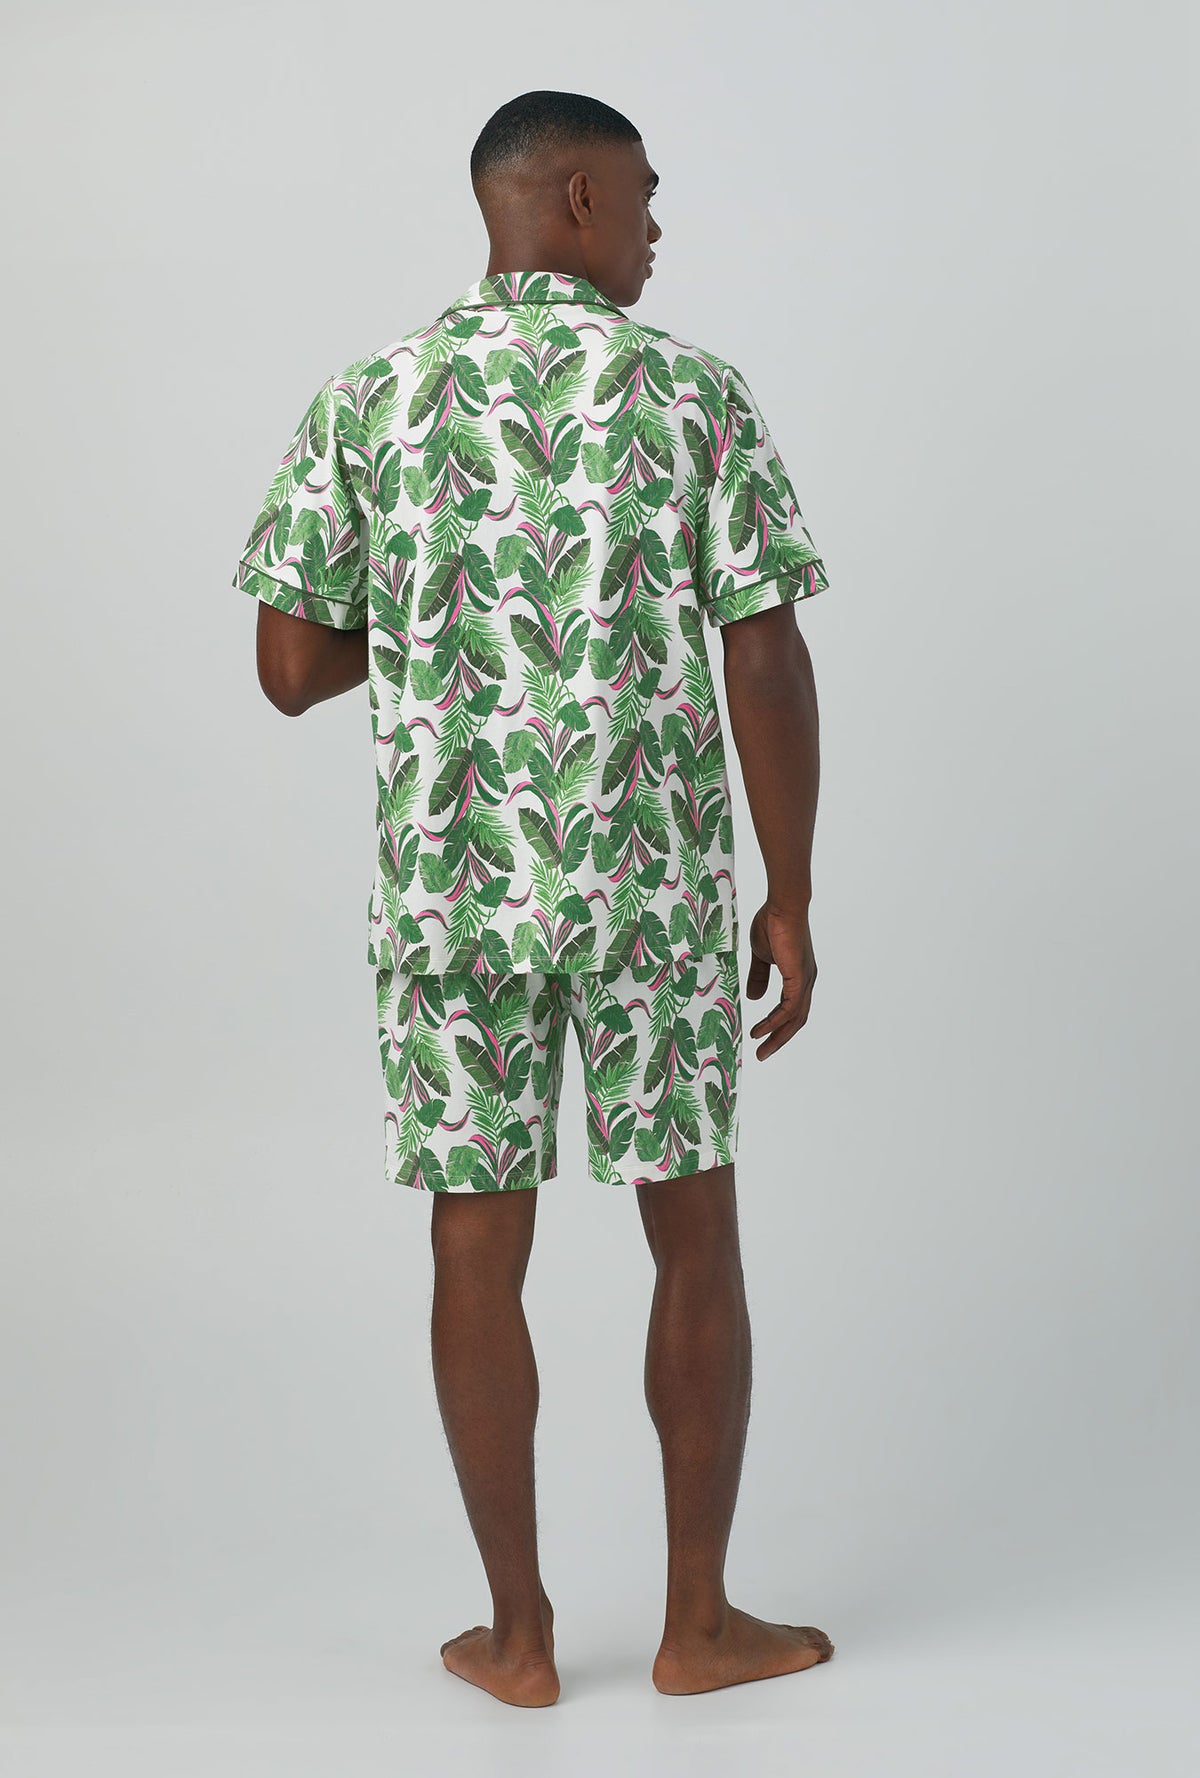 A man wearing green Short Sleeve Notch Stretch Jersey Short PJ Set with Palm Valley print